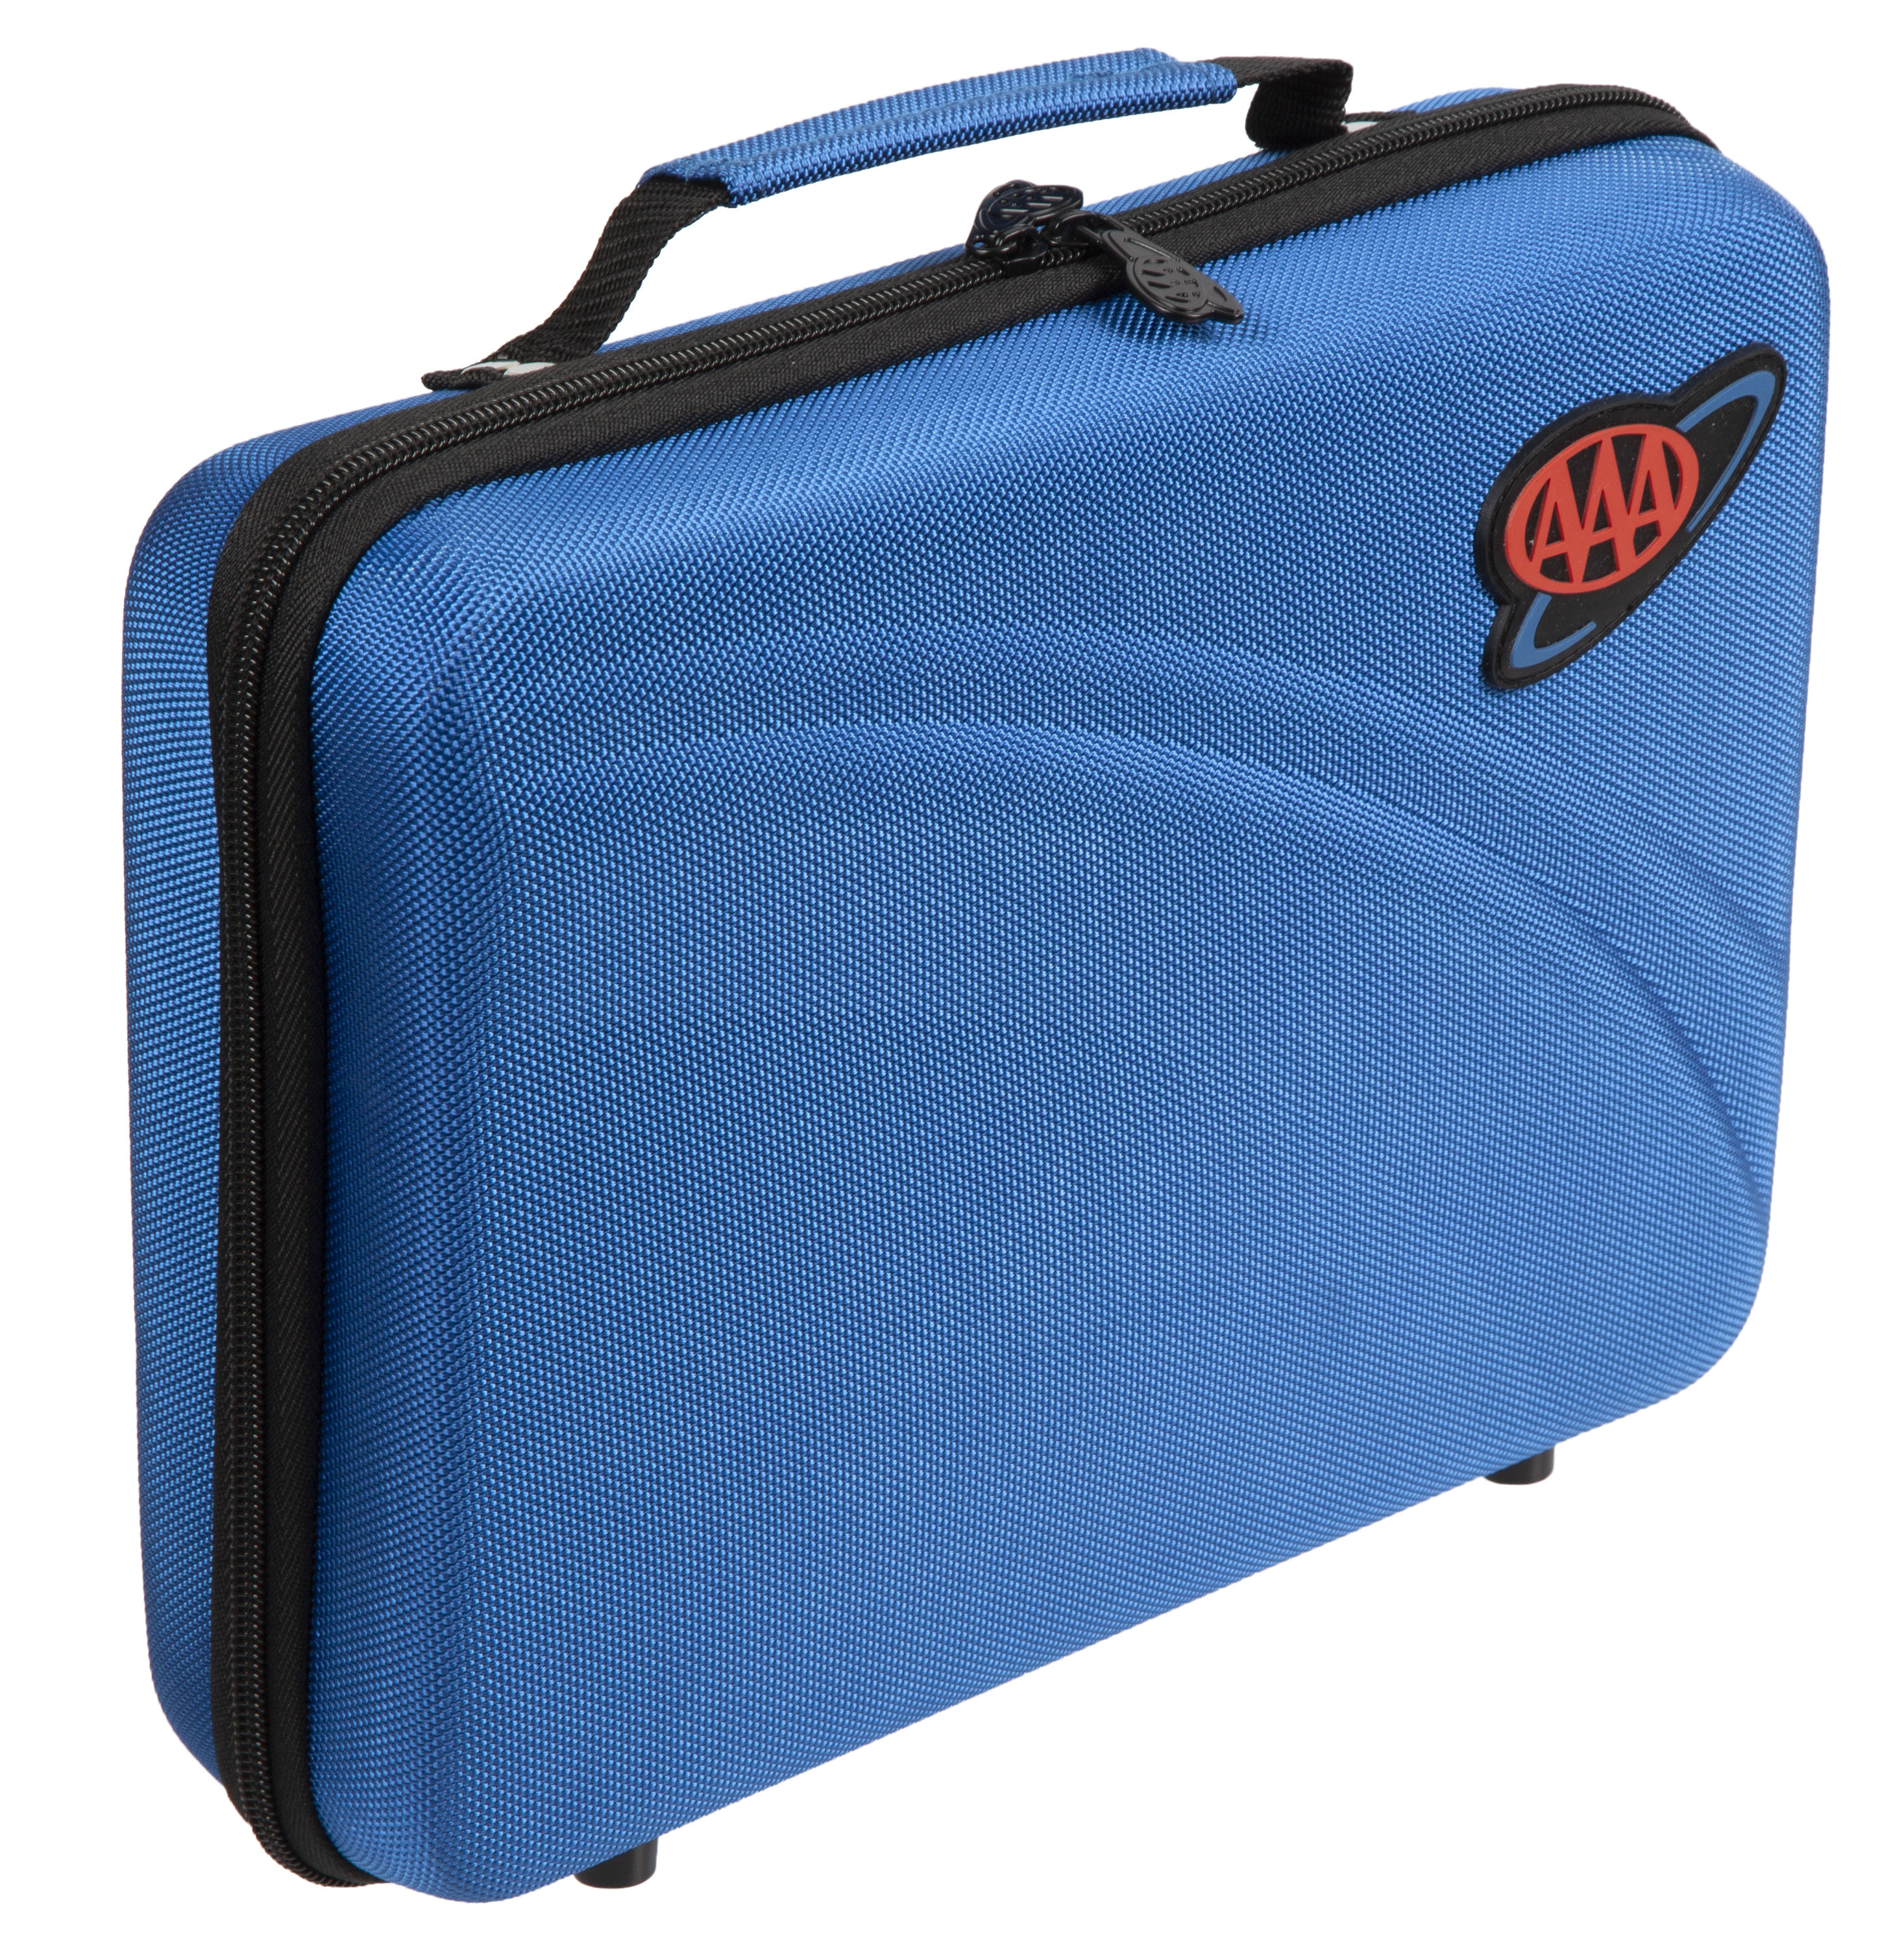 AAA Travel Emergency Kit- Lifeline USA - auto parts - by owner - vehicle  automotive sale - craigslist